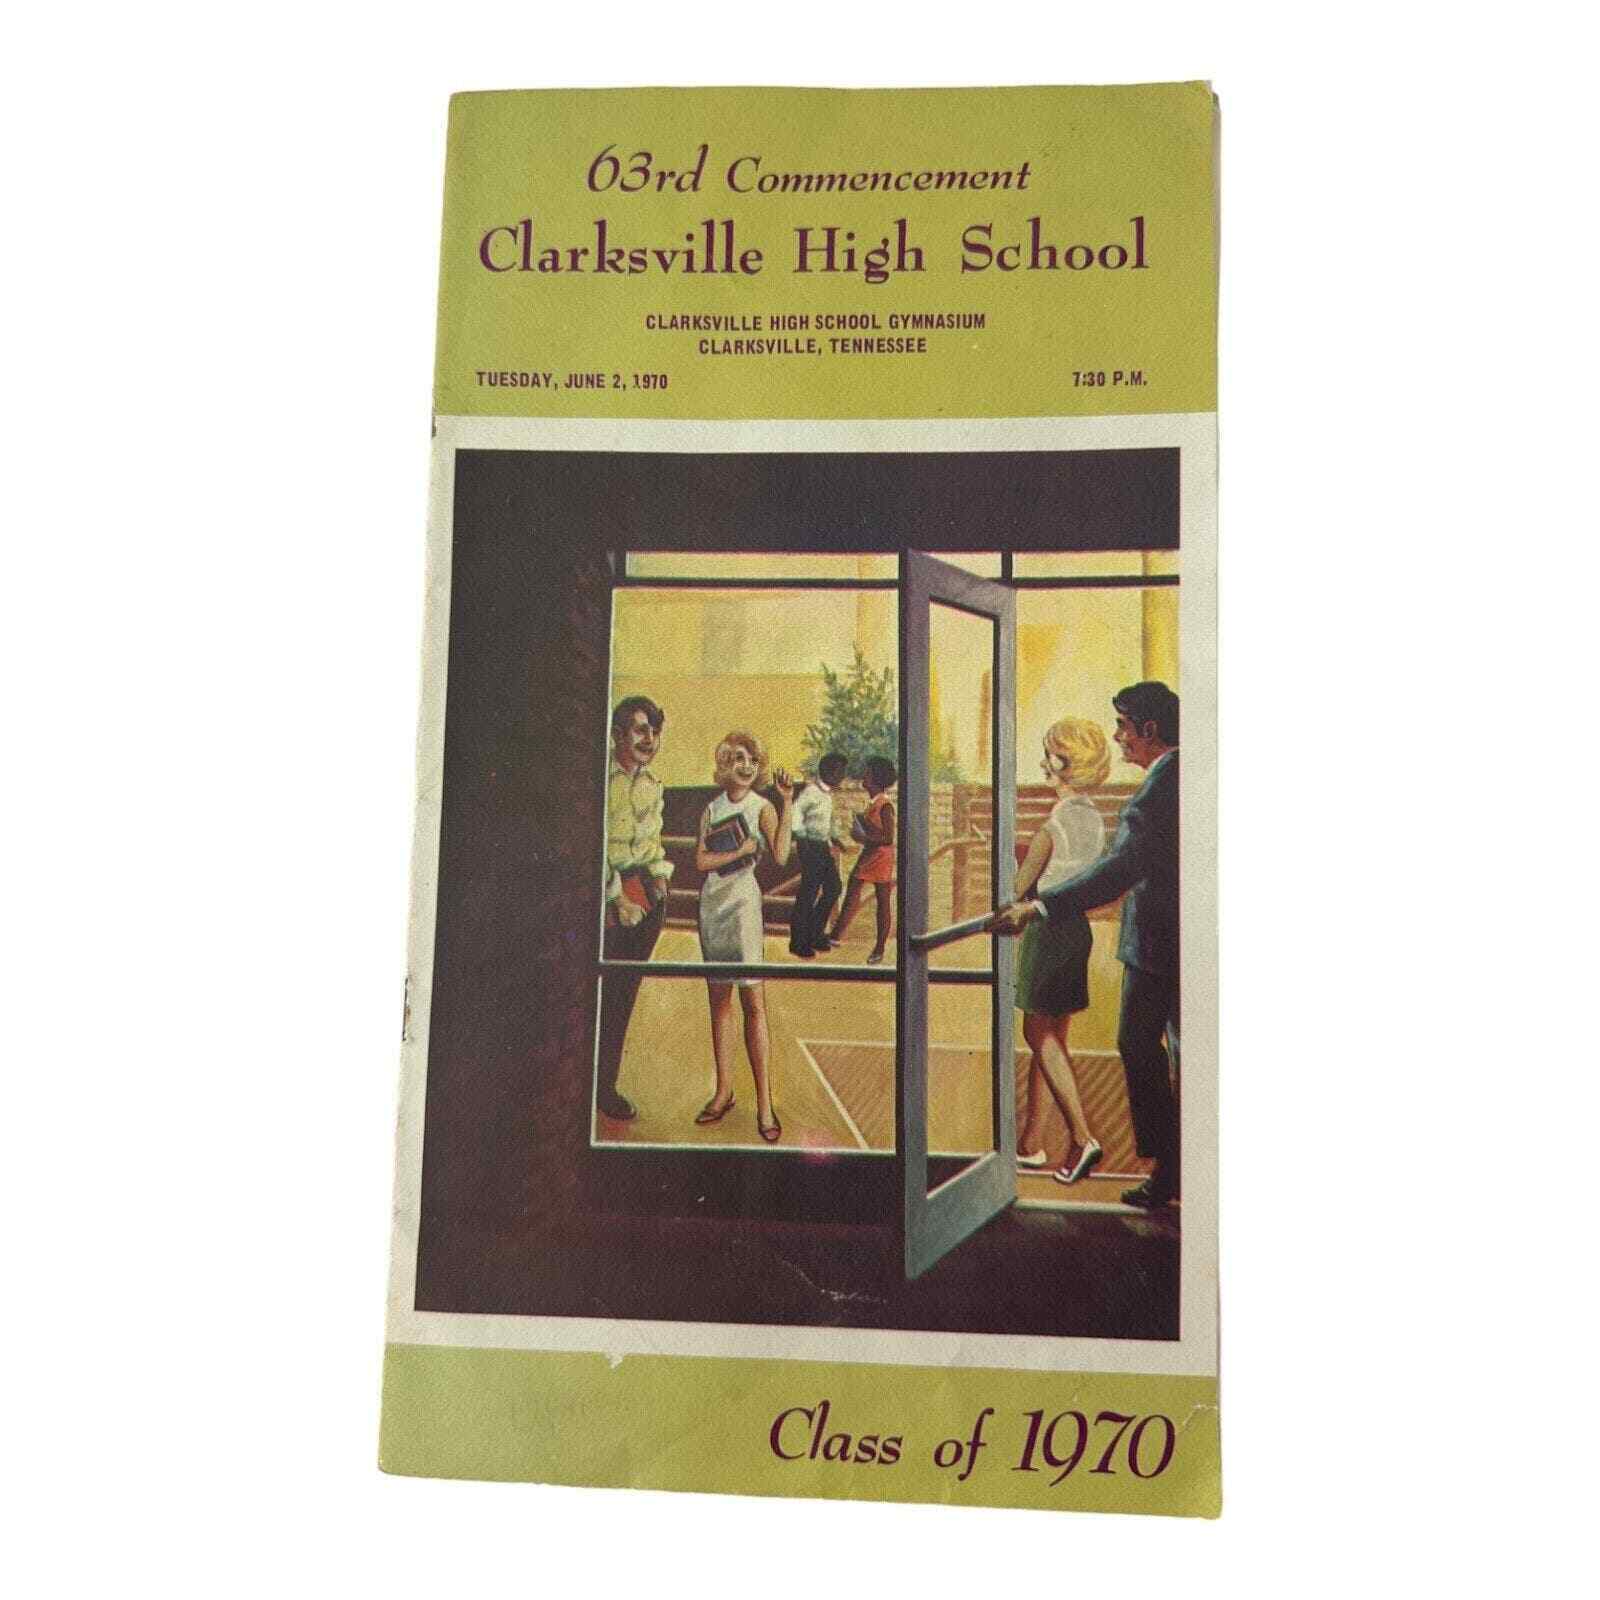 Clarksville High School Vintage Commencement Program Clarksville Tennessee 1970